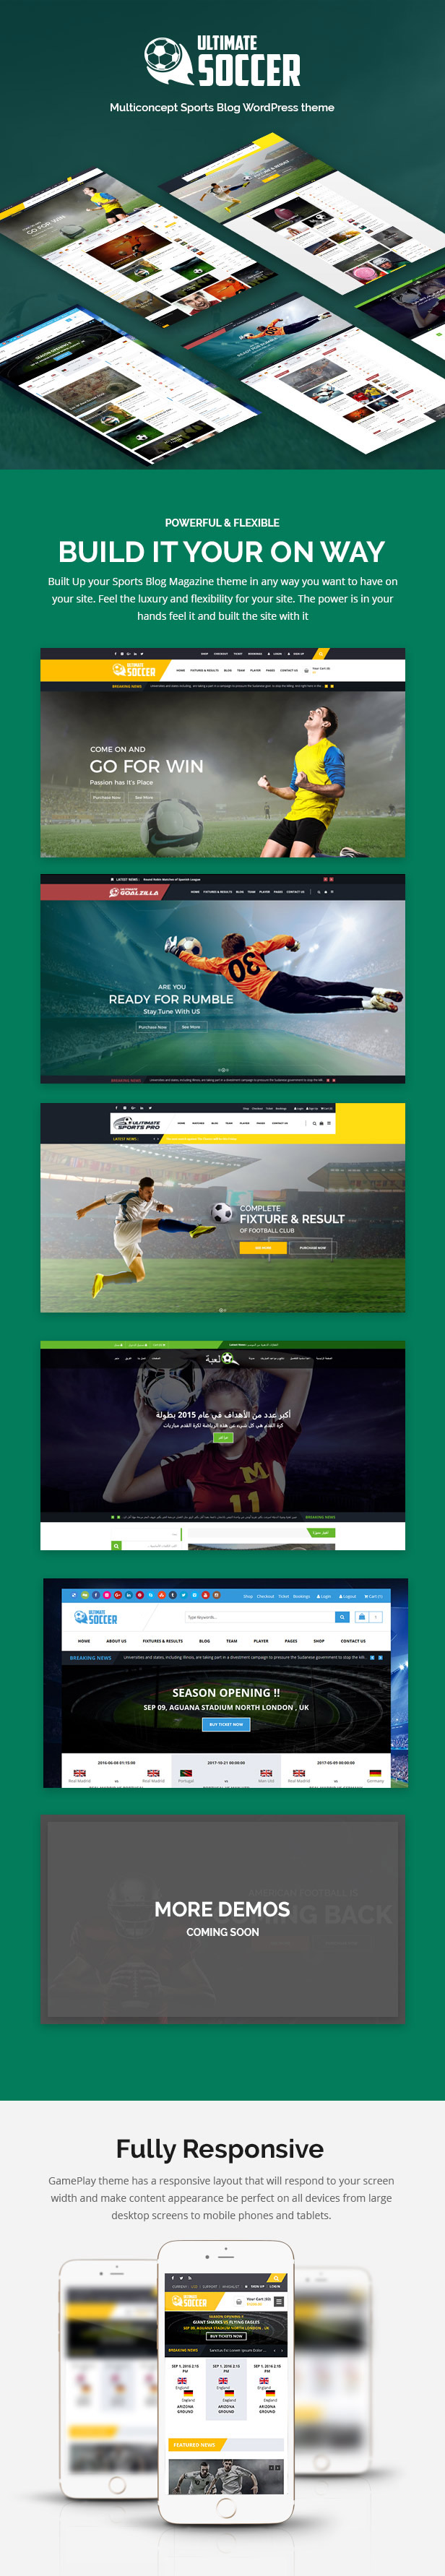 Ultimate Soccer - 스포츠 클럽 및 축구 뉴스 매거진 워드프레스 테마 2